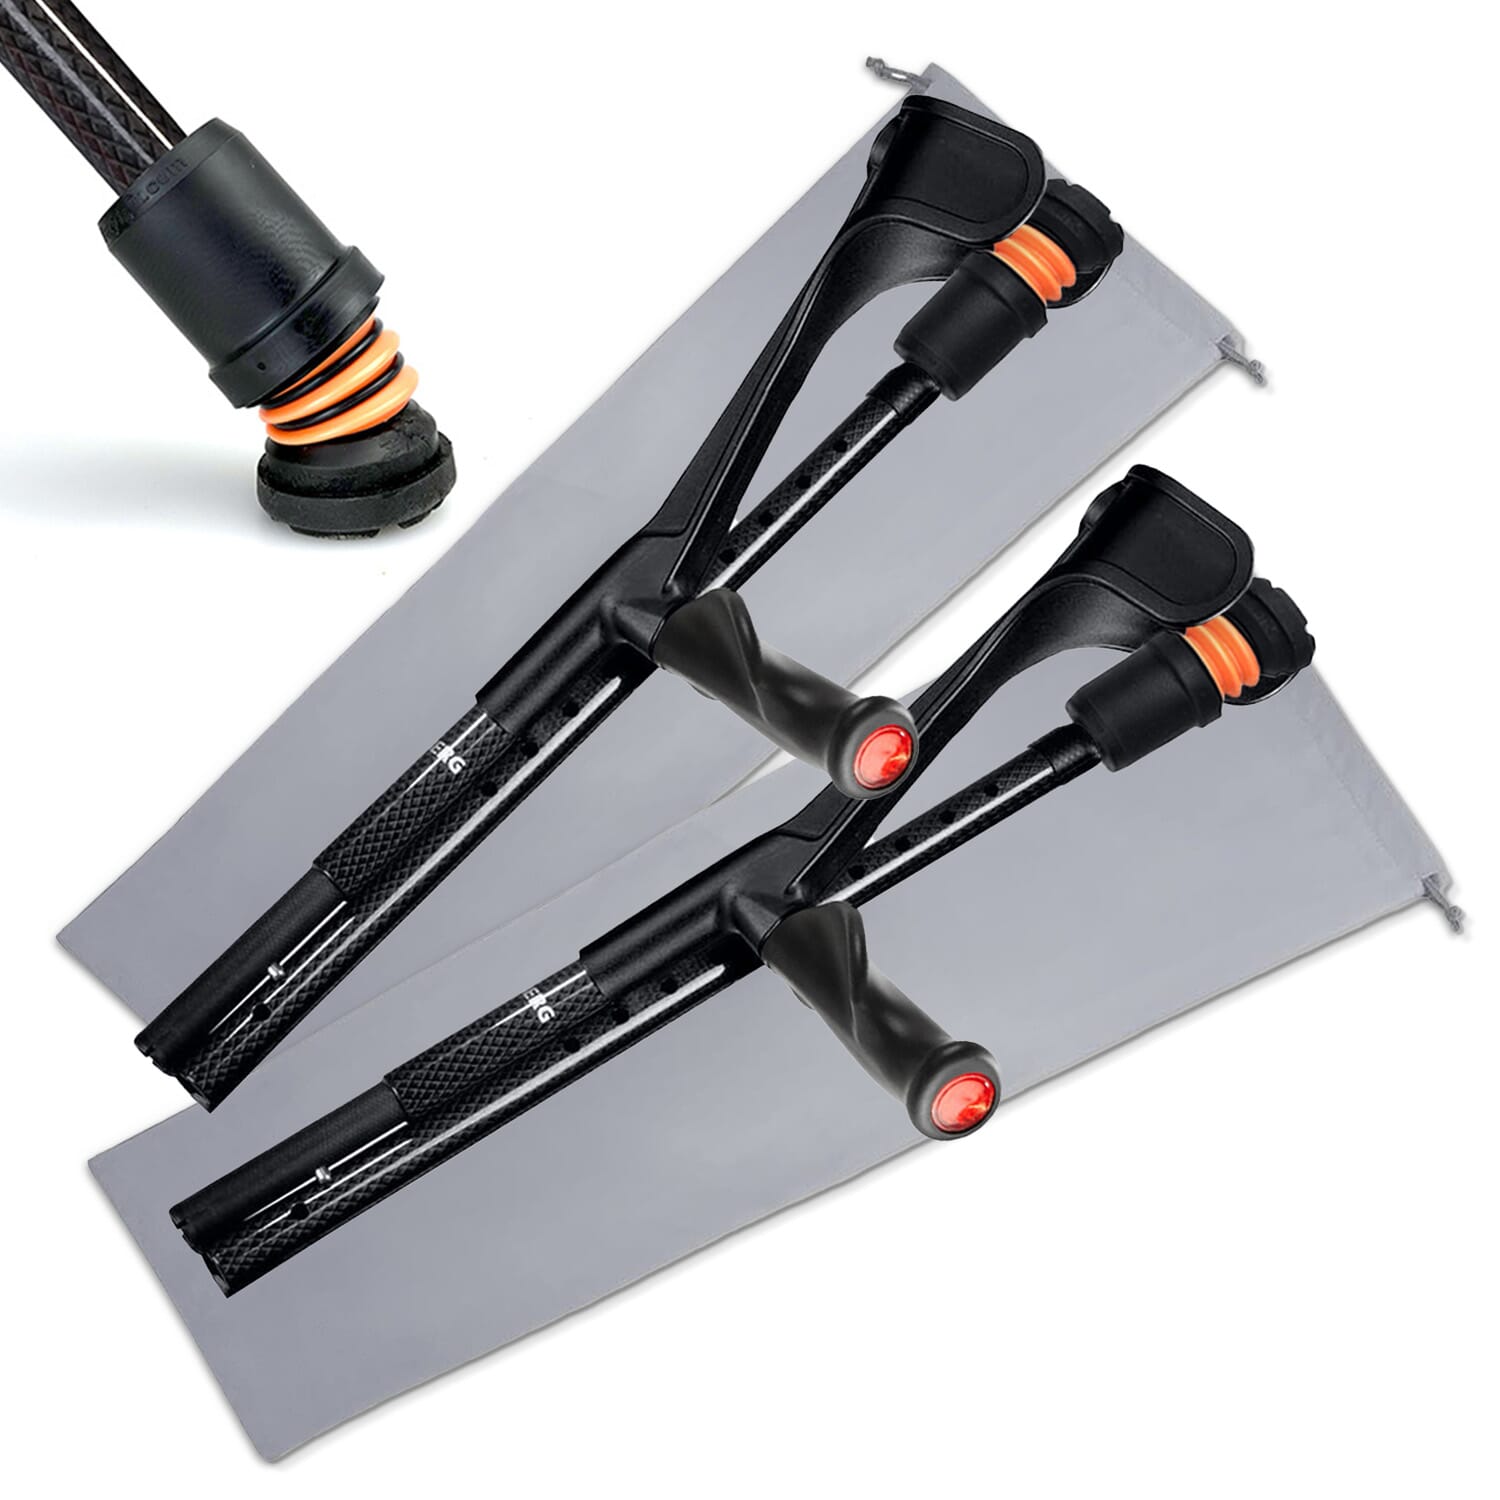 View Flexyfoot Carbon Fibre Comfort Grip Folding Crutches Black Pair information